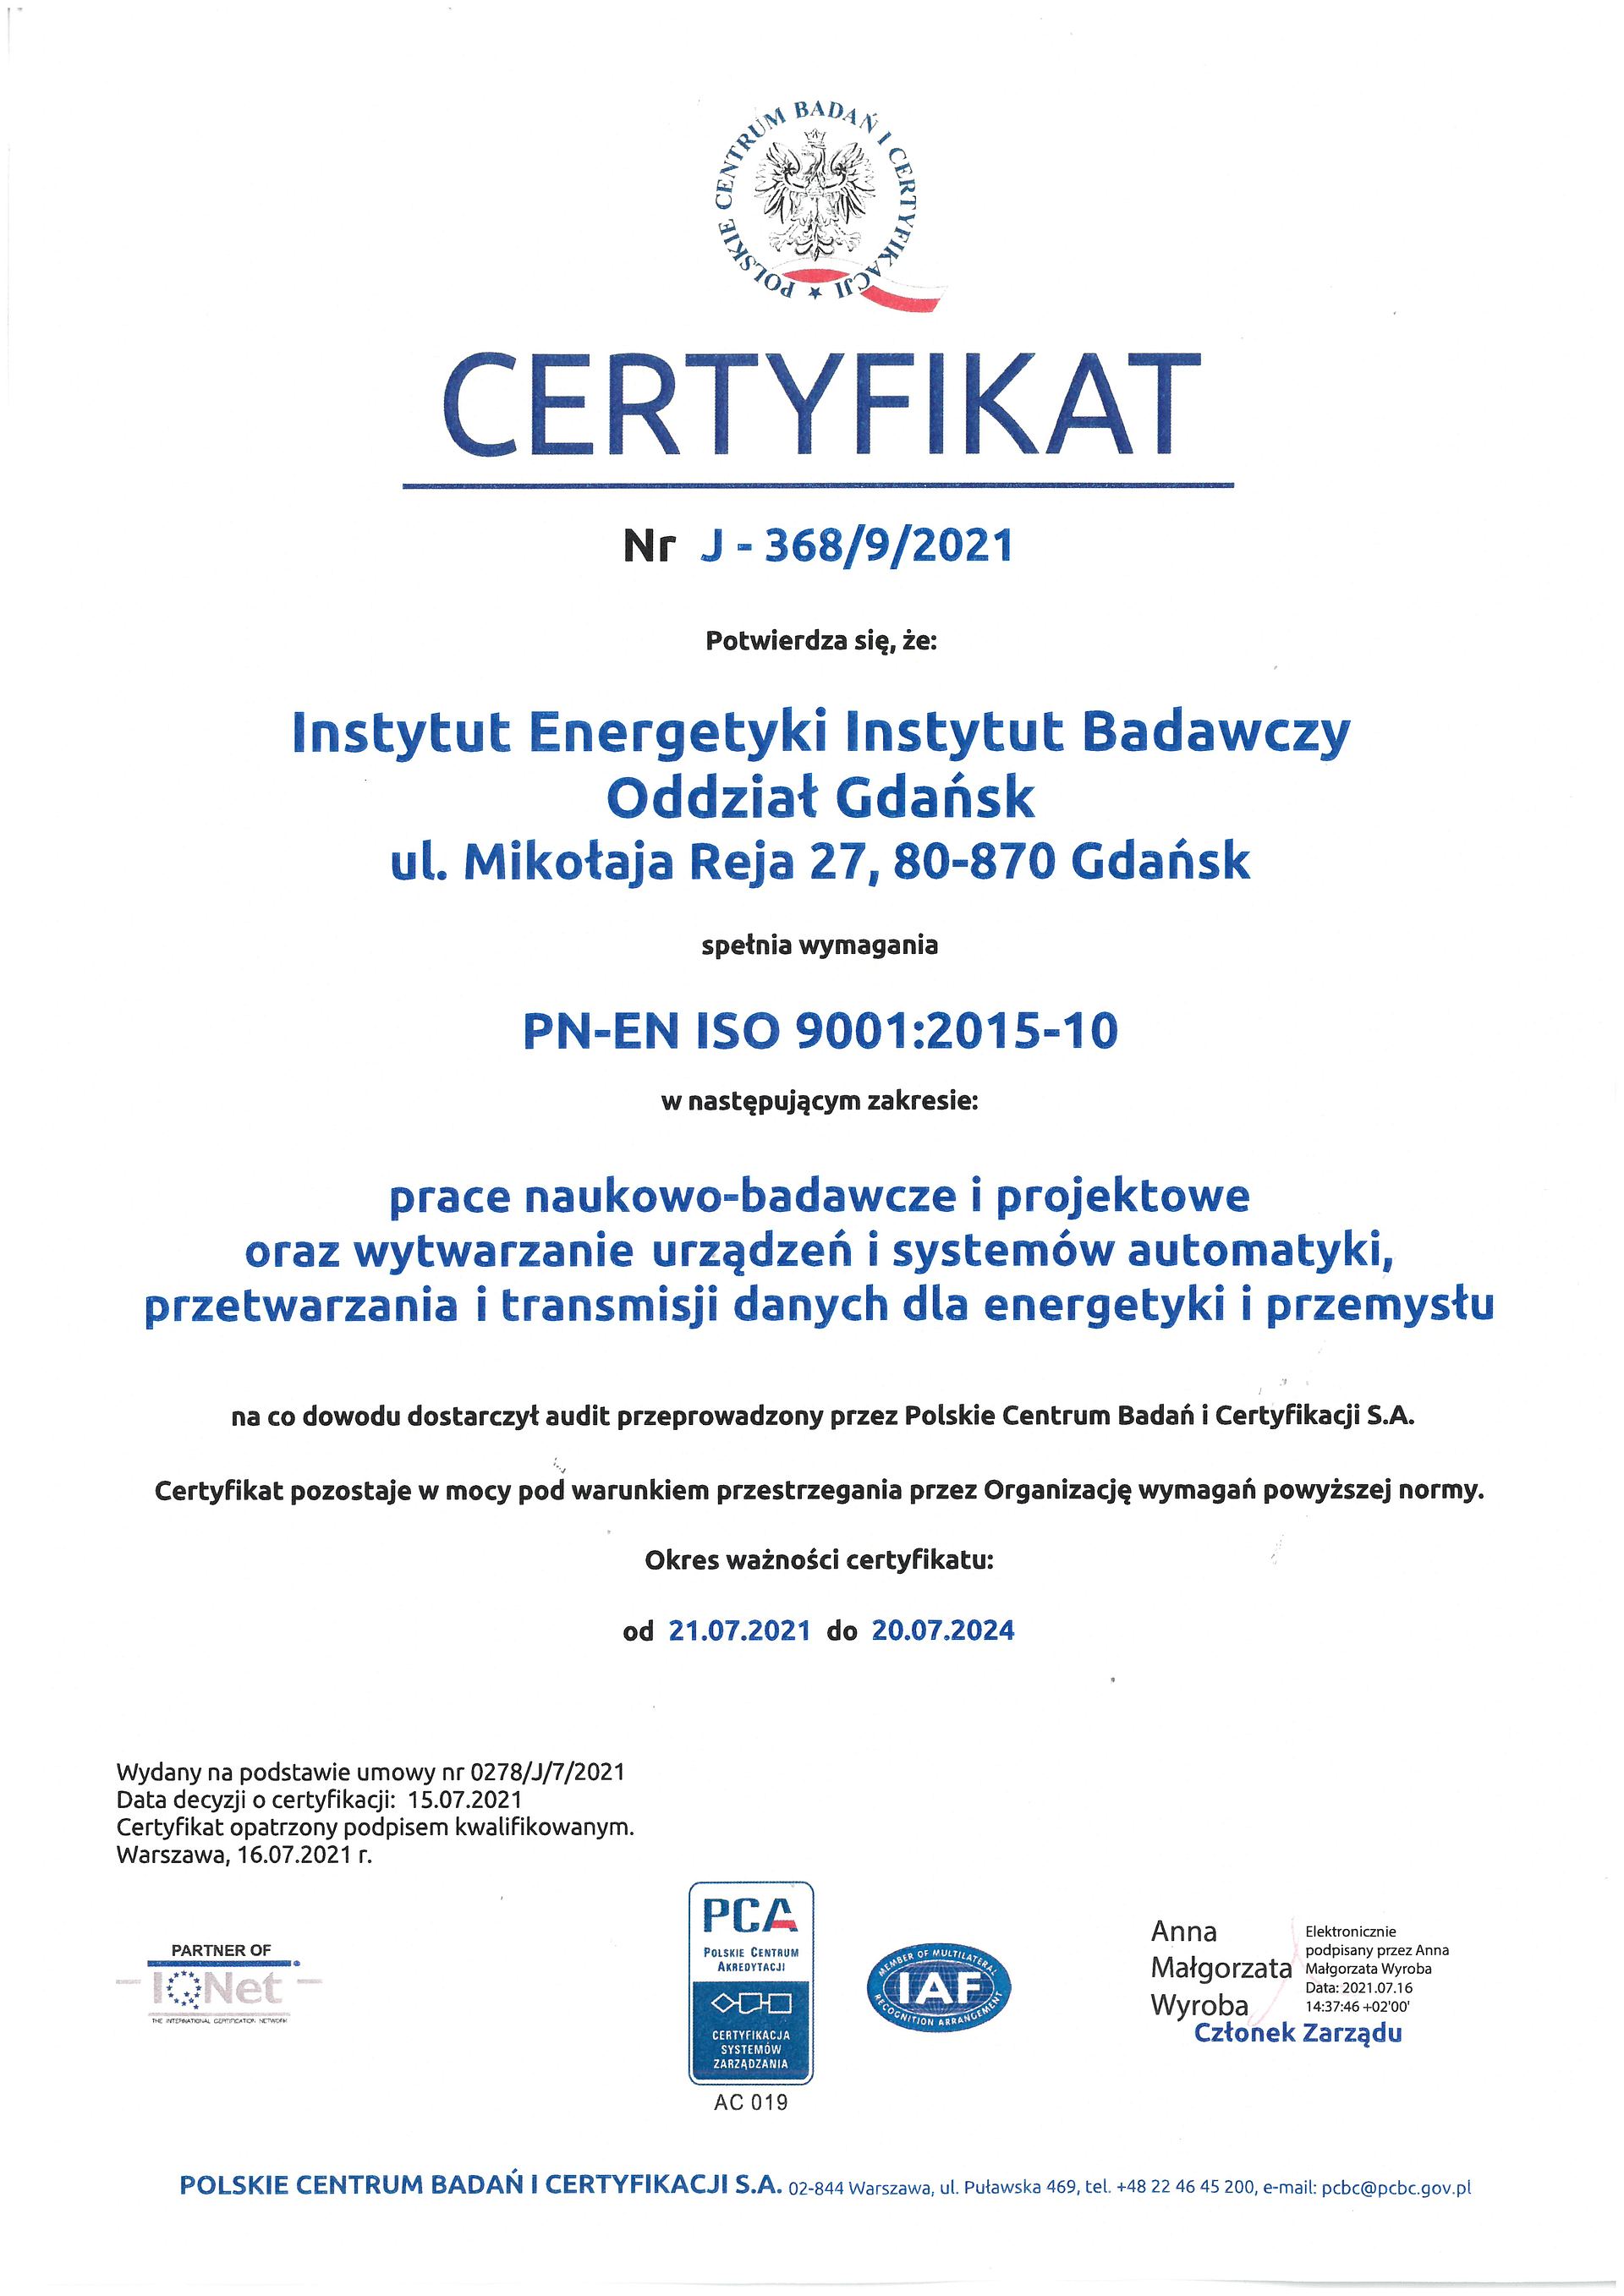 Certyfikat PN-EN ISO 9001:2015-10 (plik *.jpg)